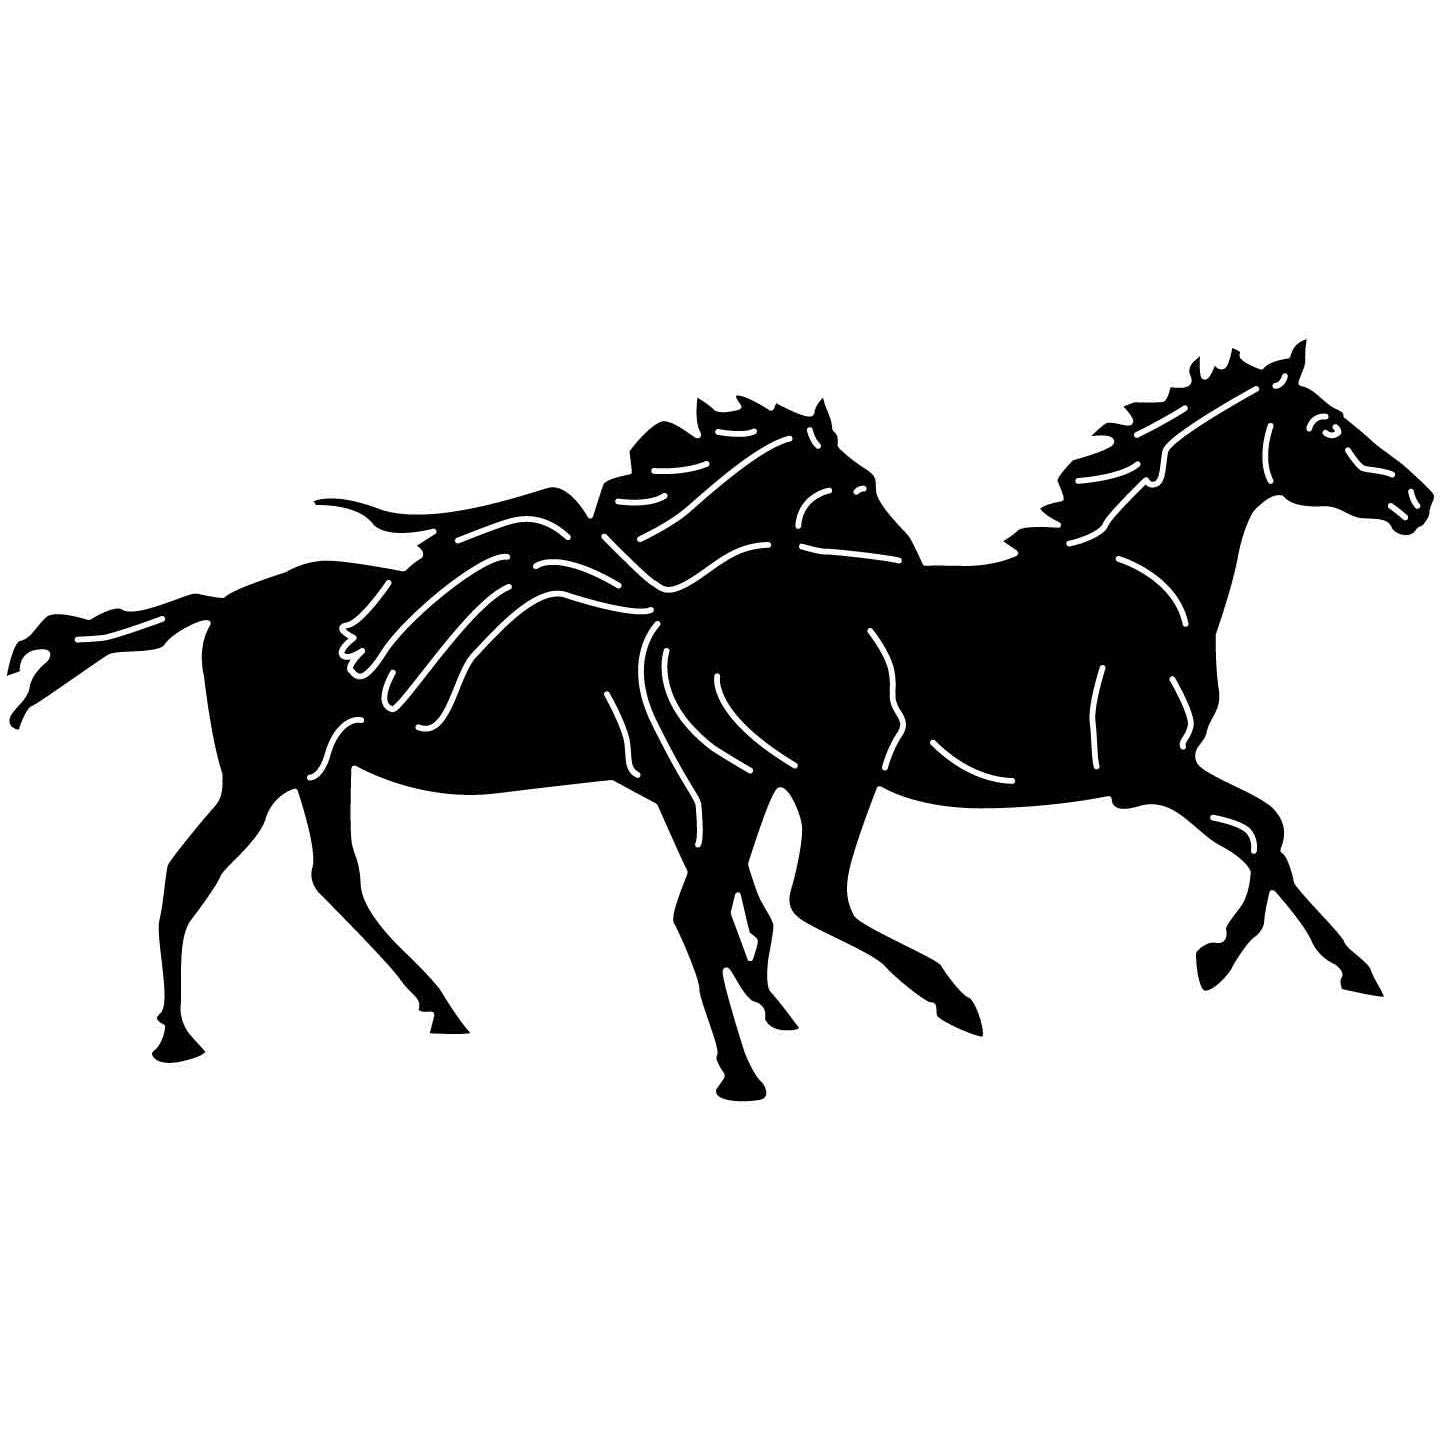 Horses and Cowboys 05